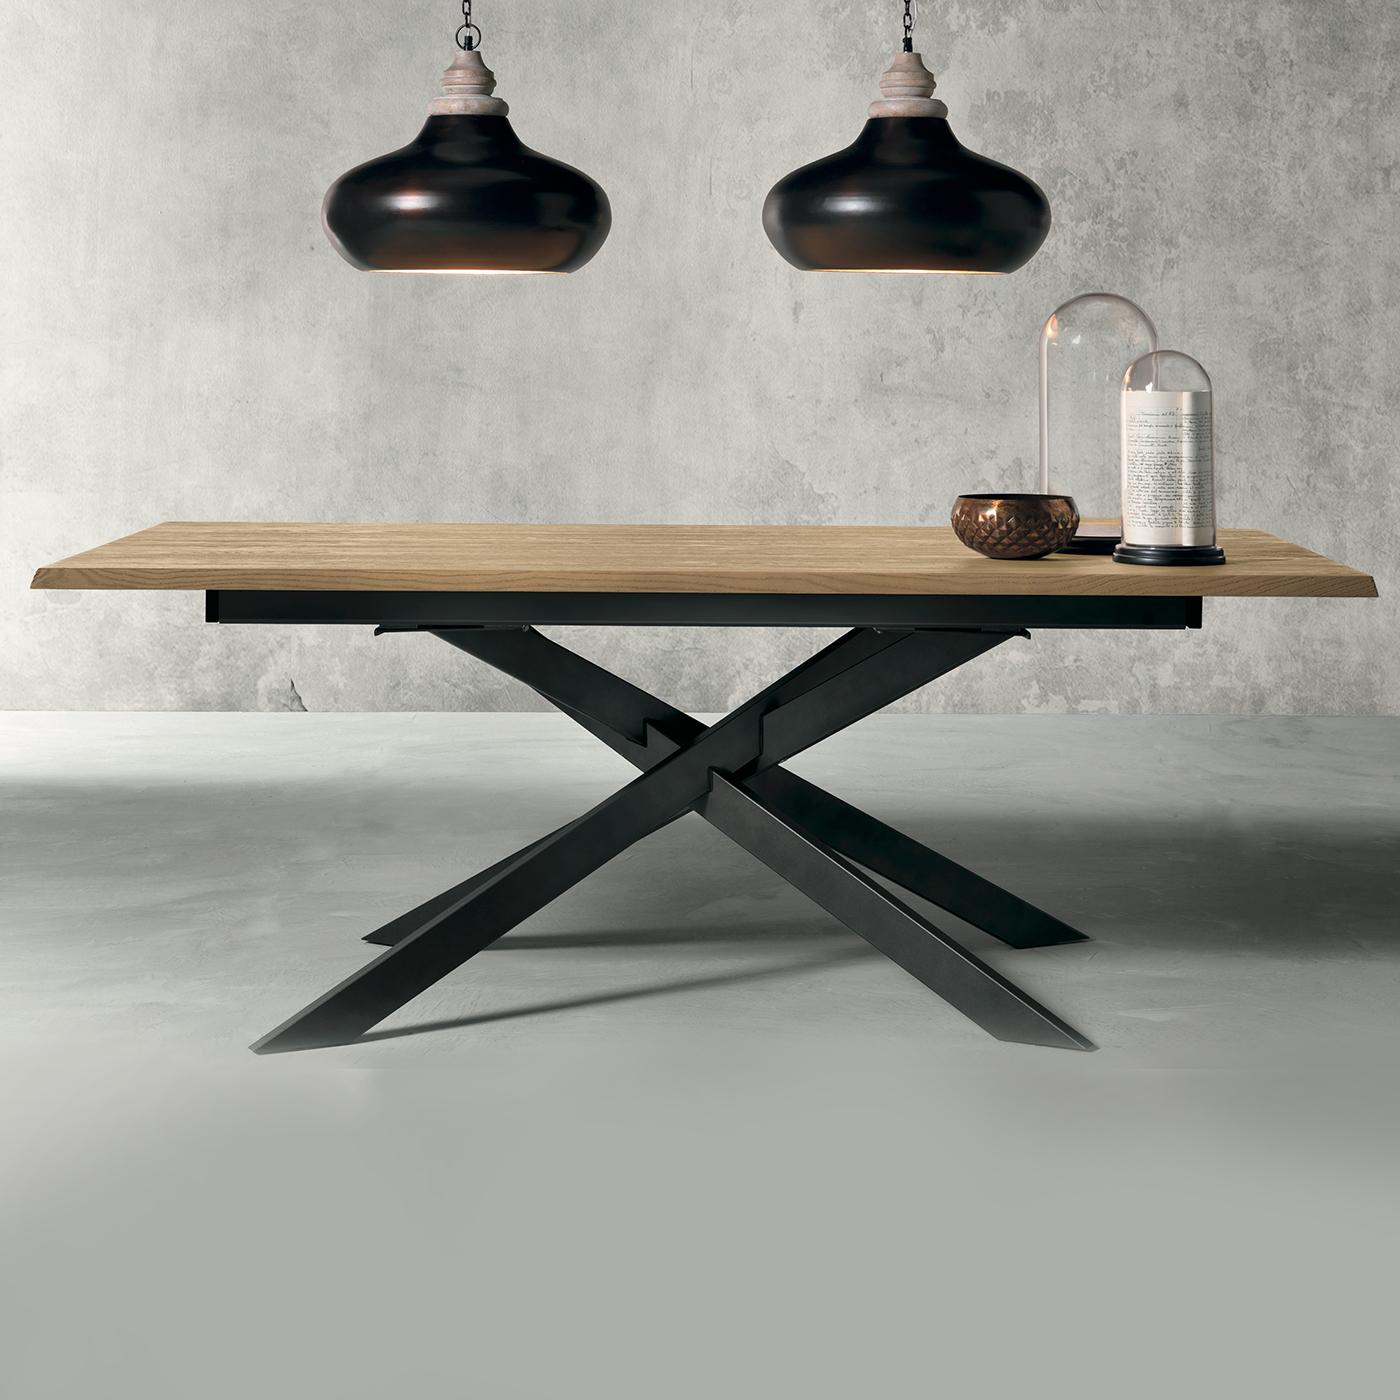 Italian Davis Large Extendable Table by Benedetti Tavoli d'Arredo